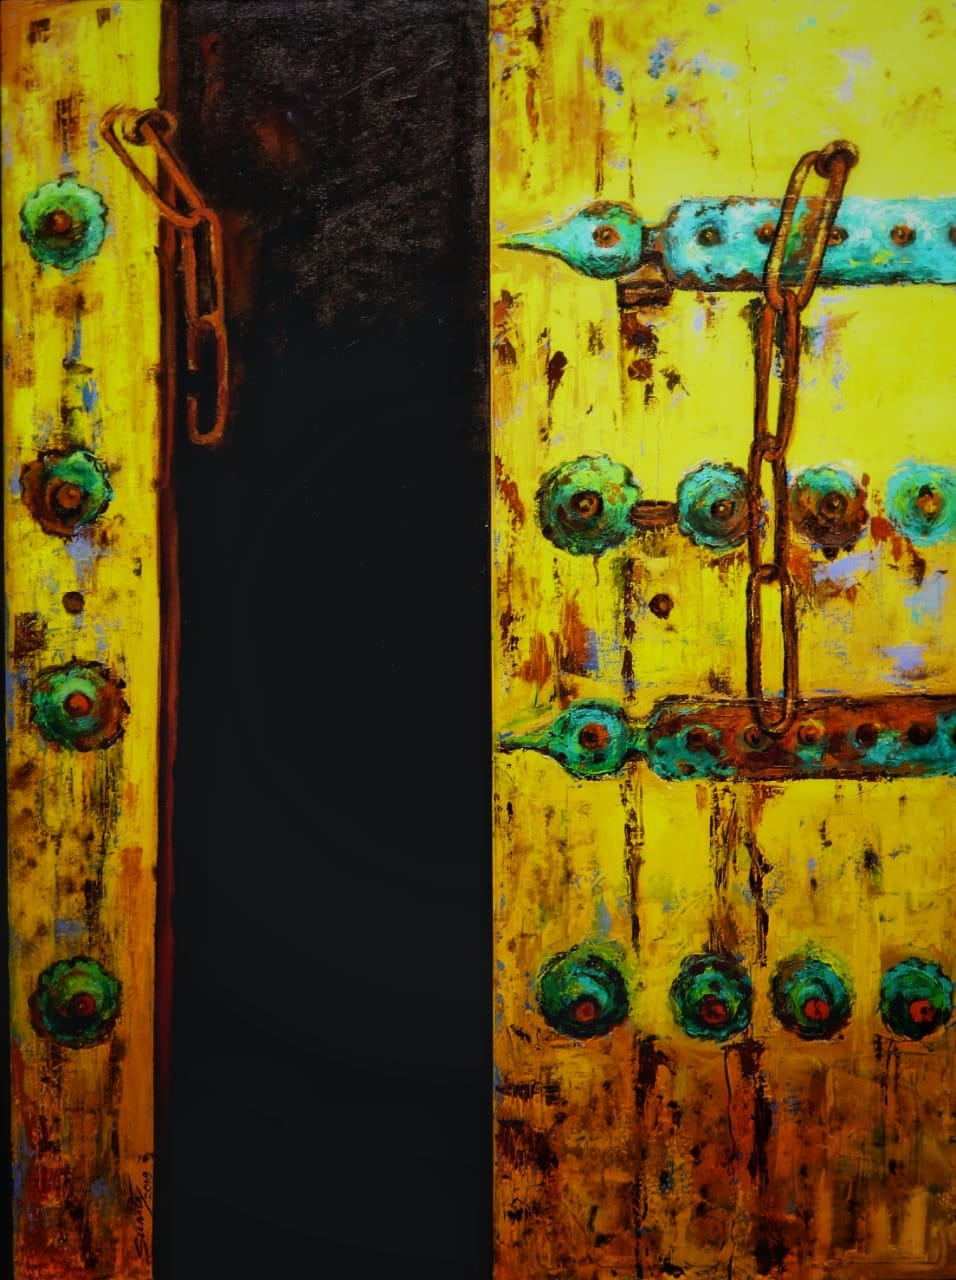 Doors of perceptions 1